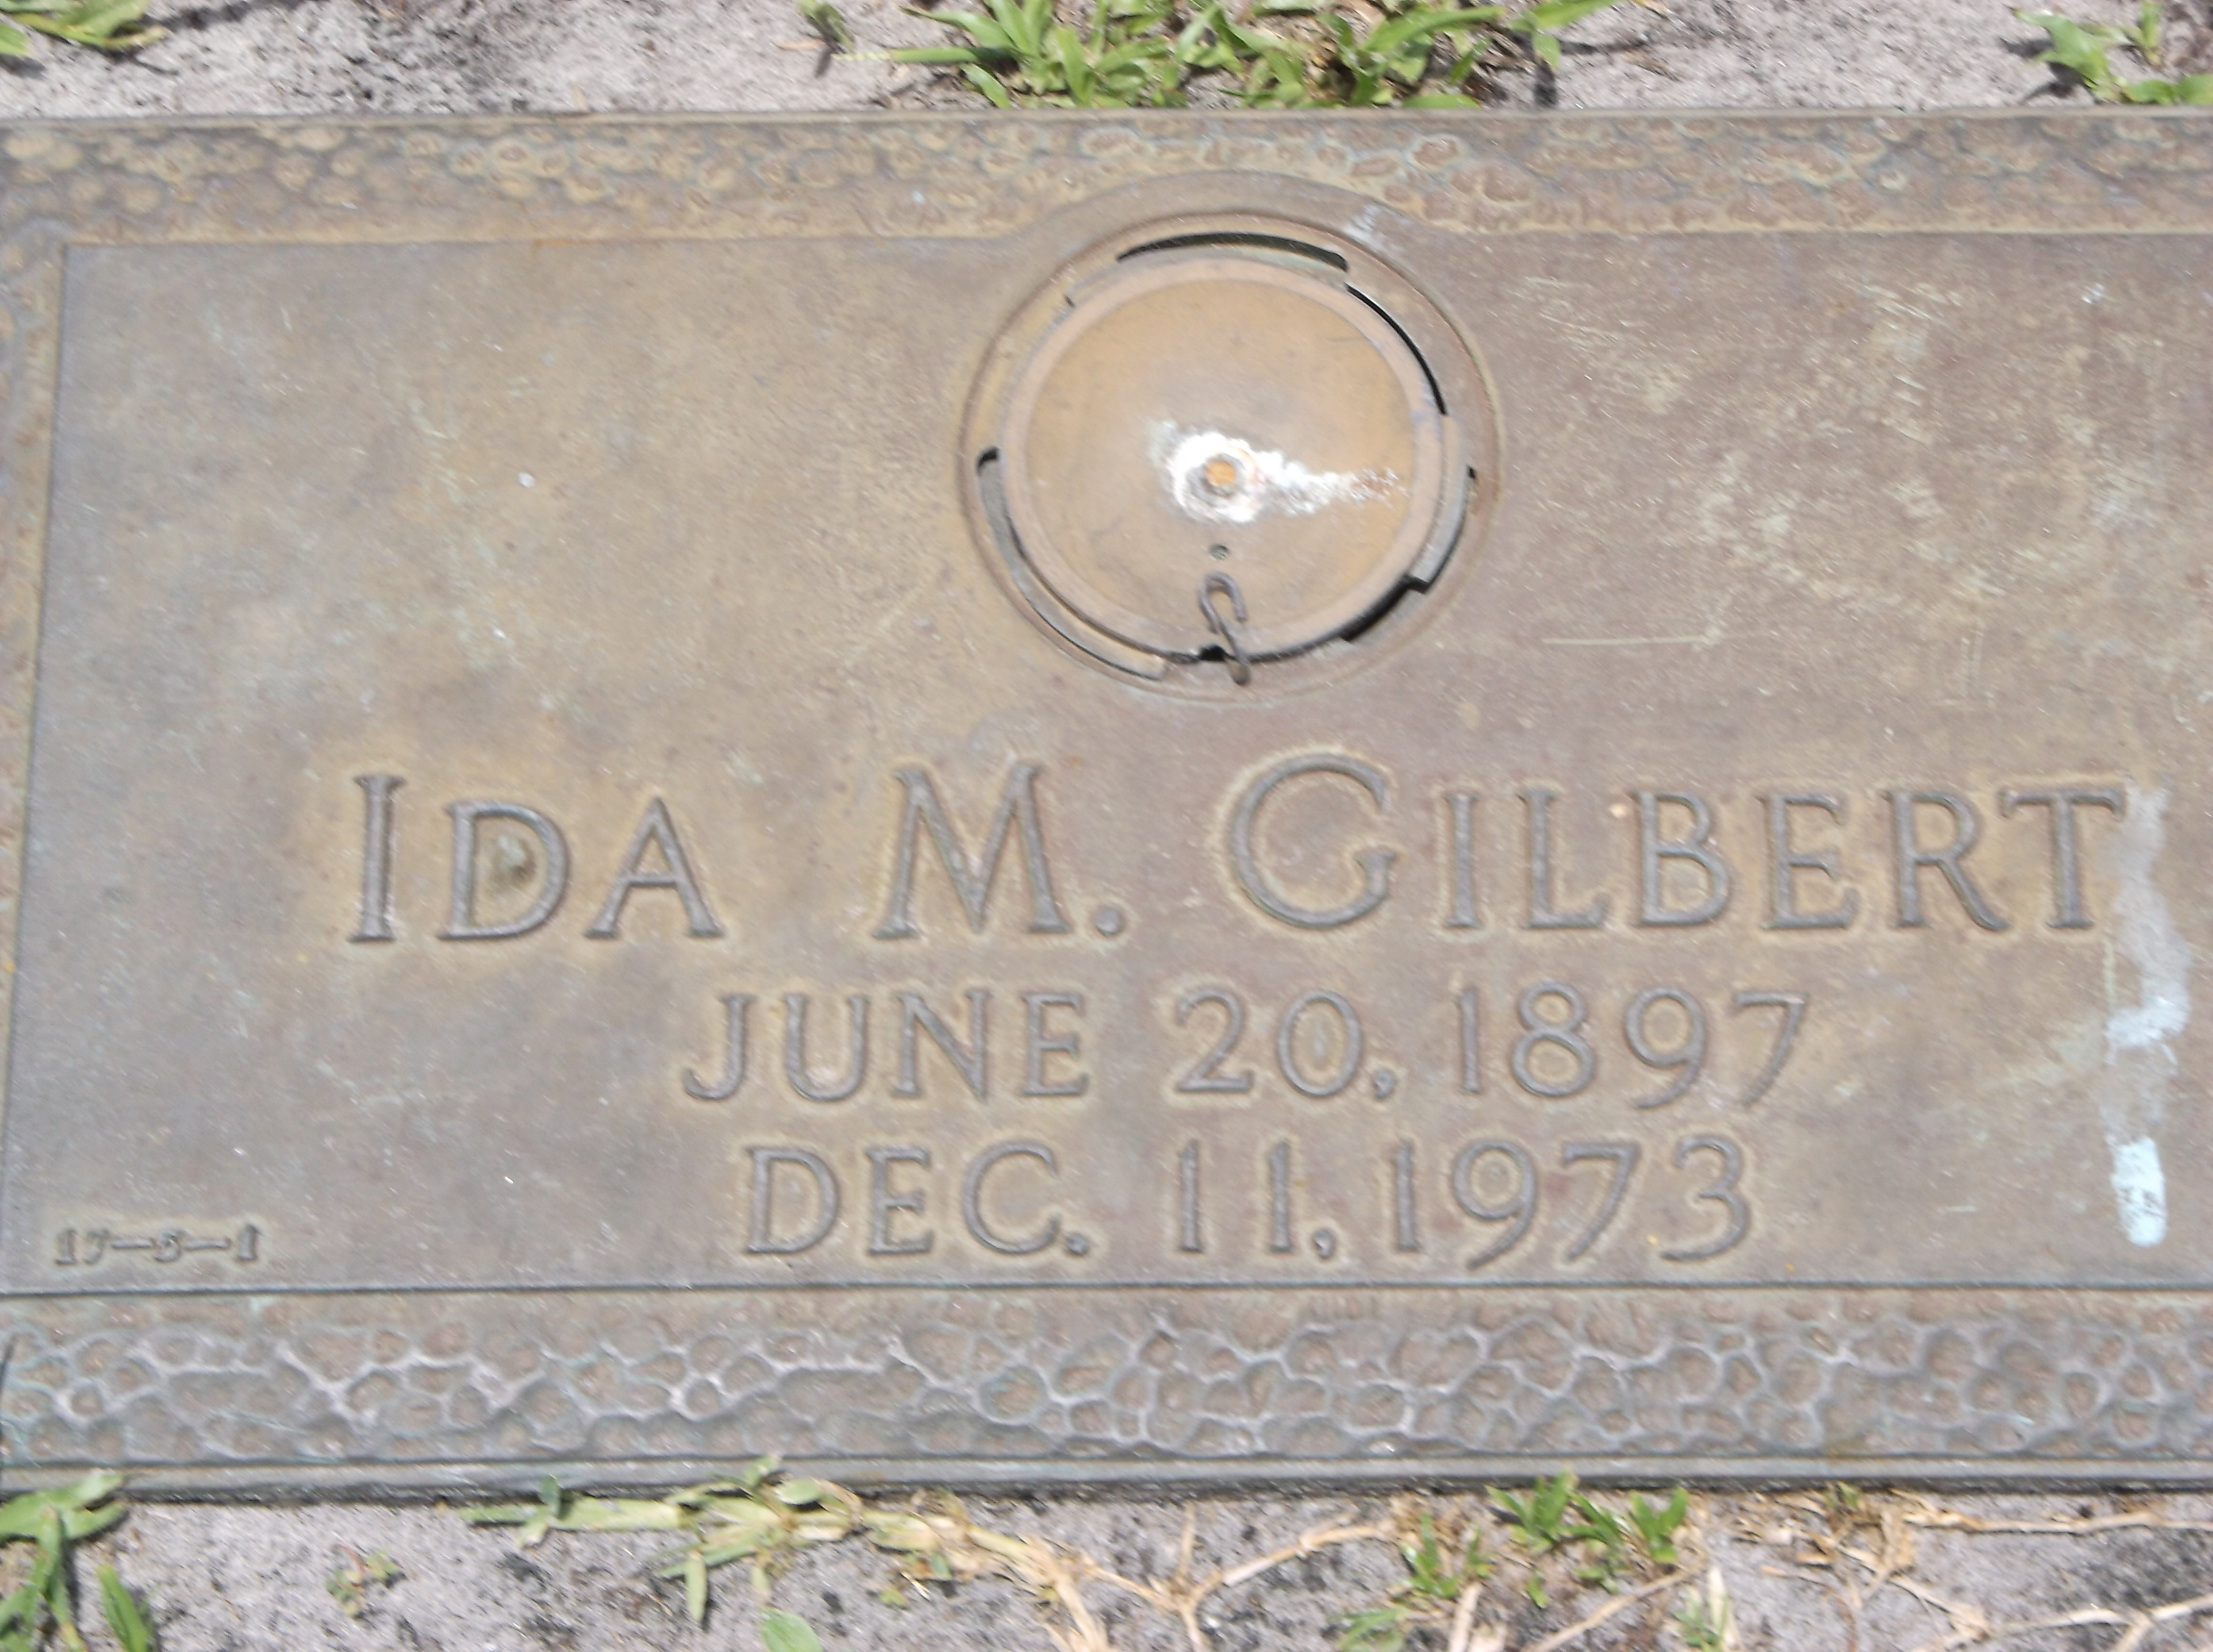 Ida M Gilbert